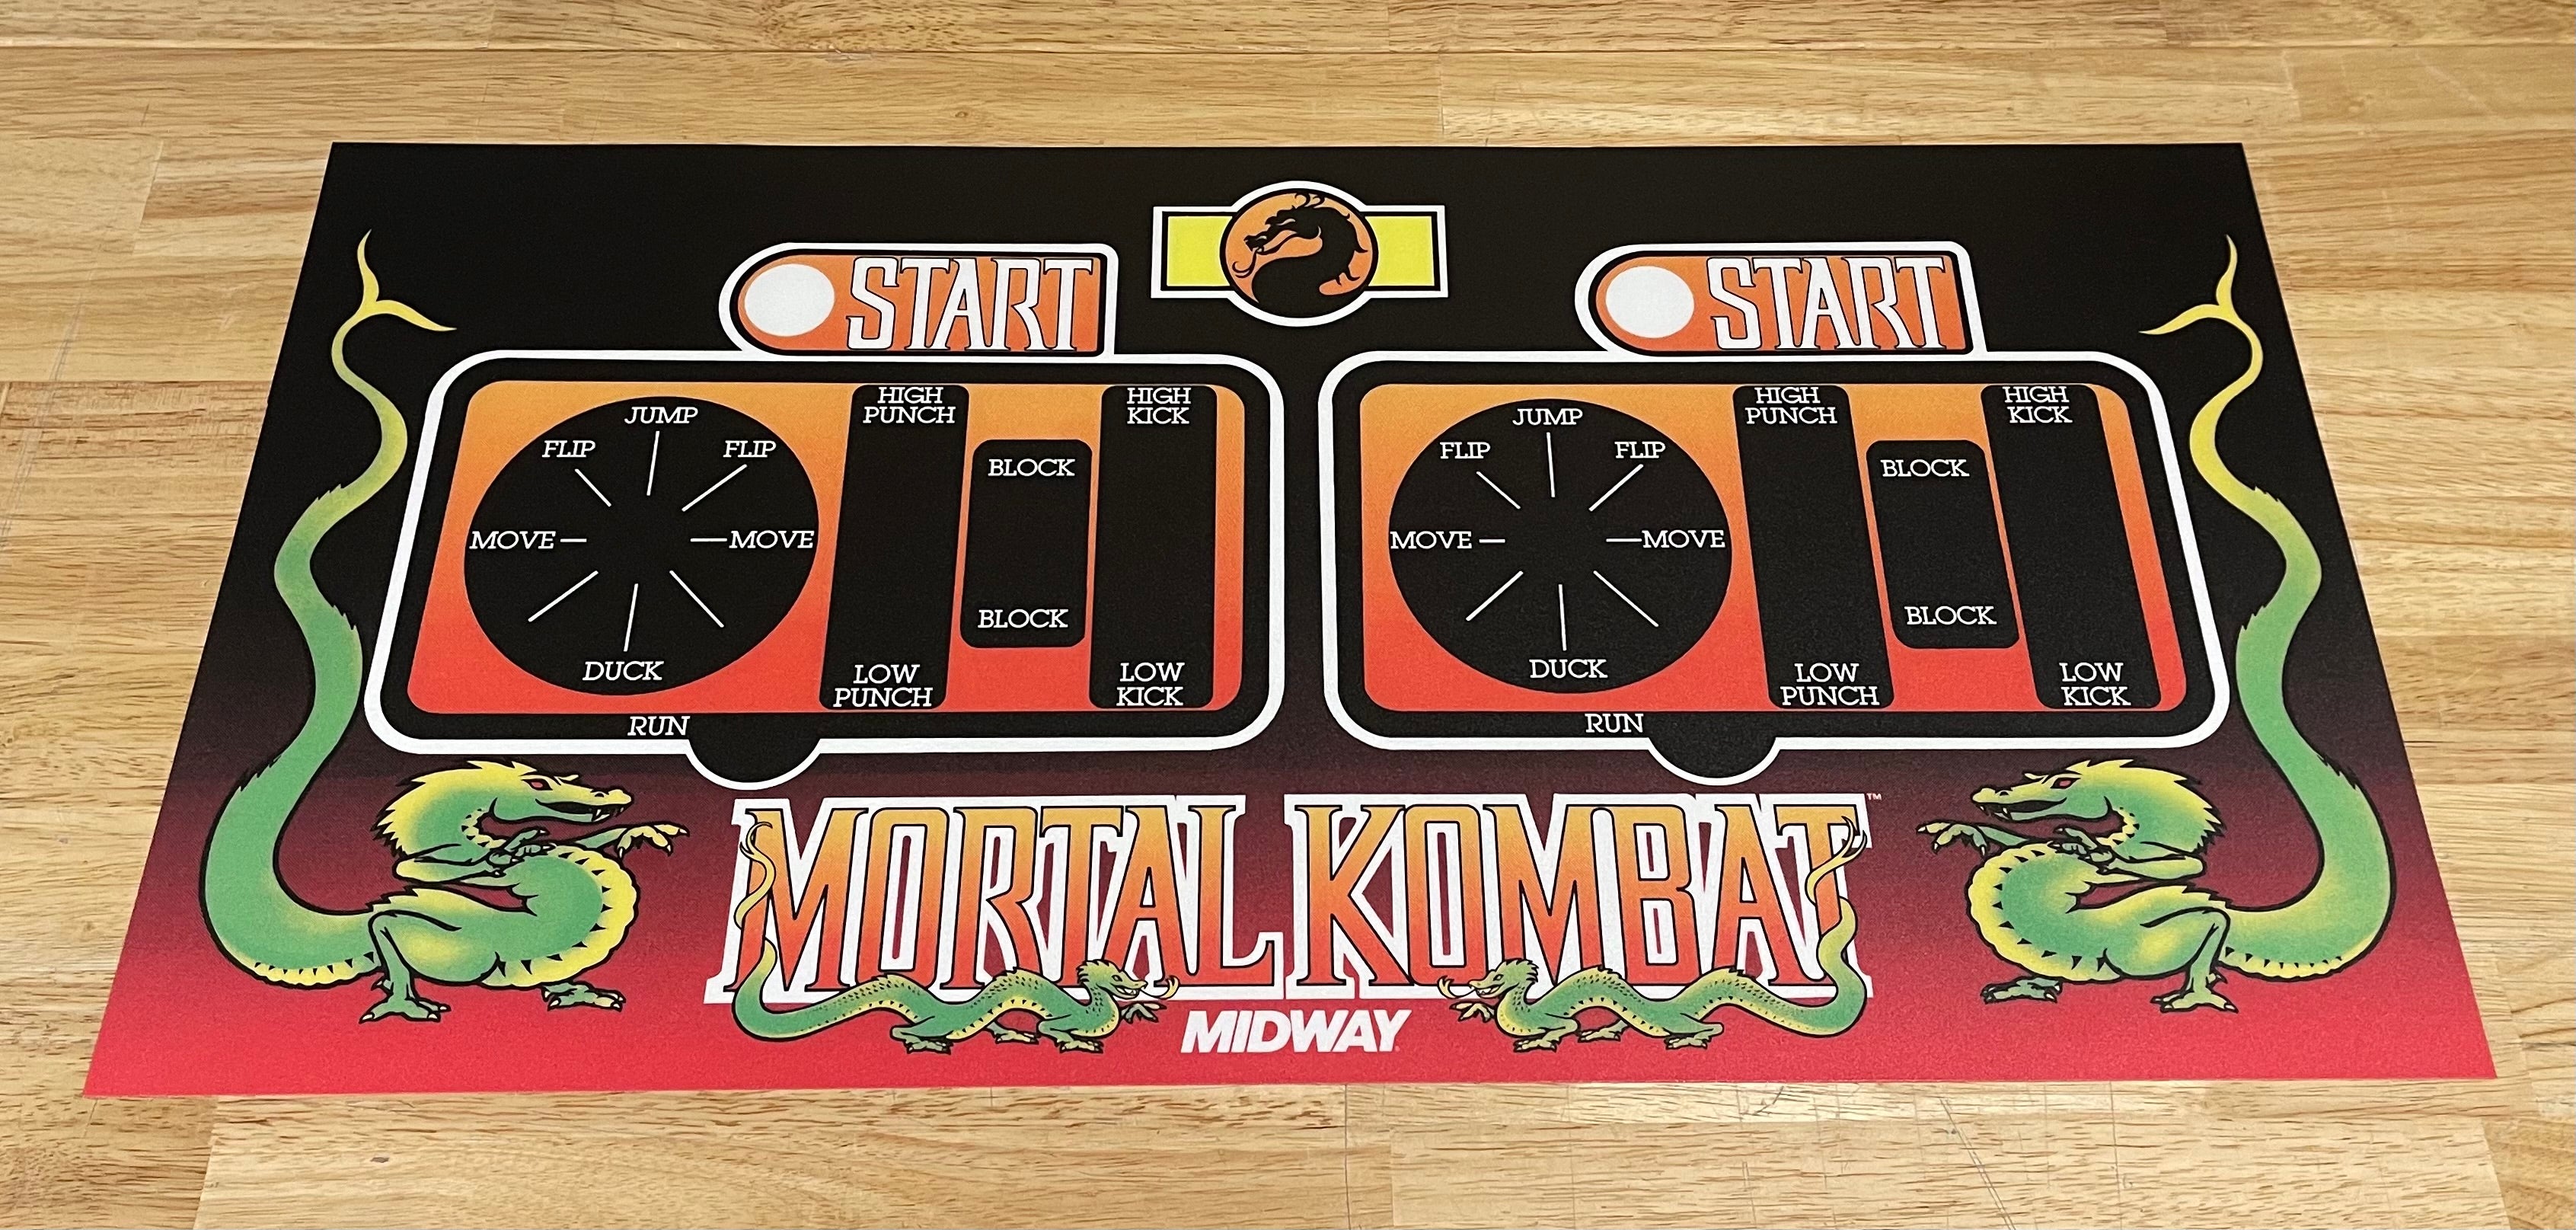 Mortal Kombat CPO with Run Button